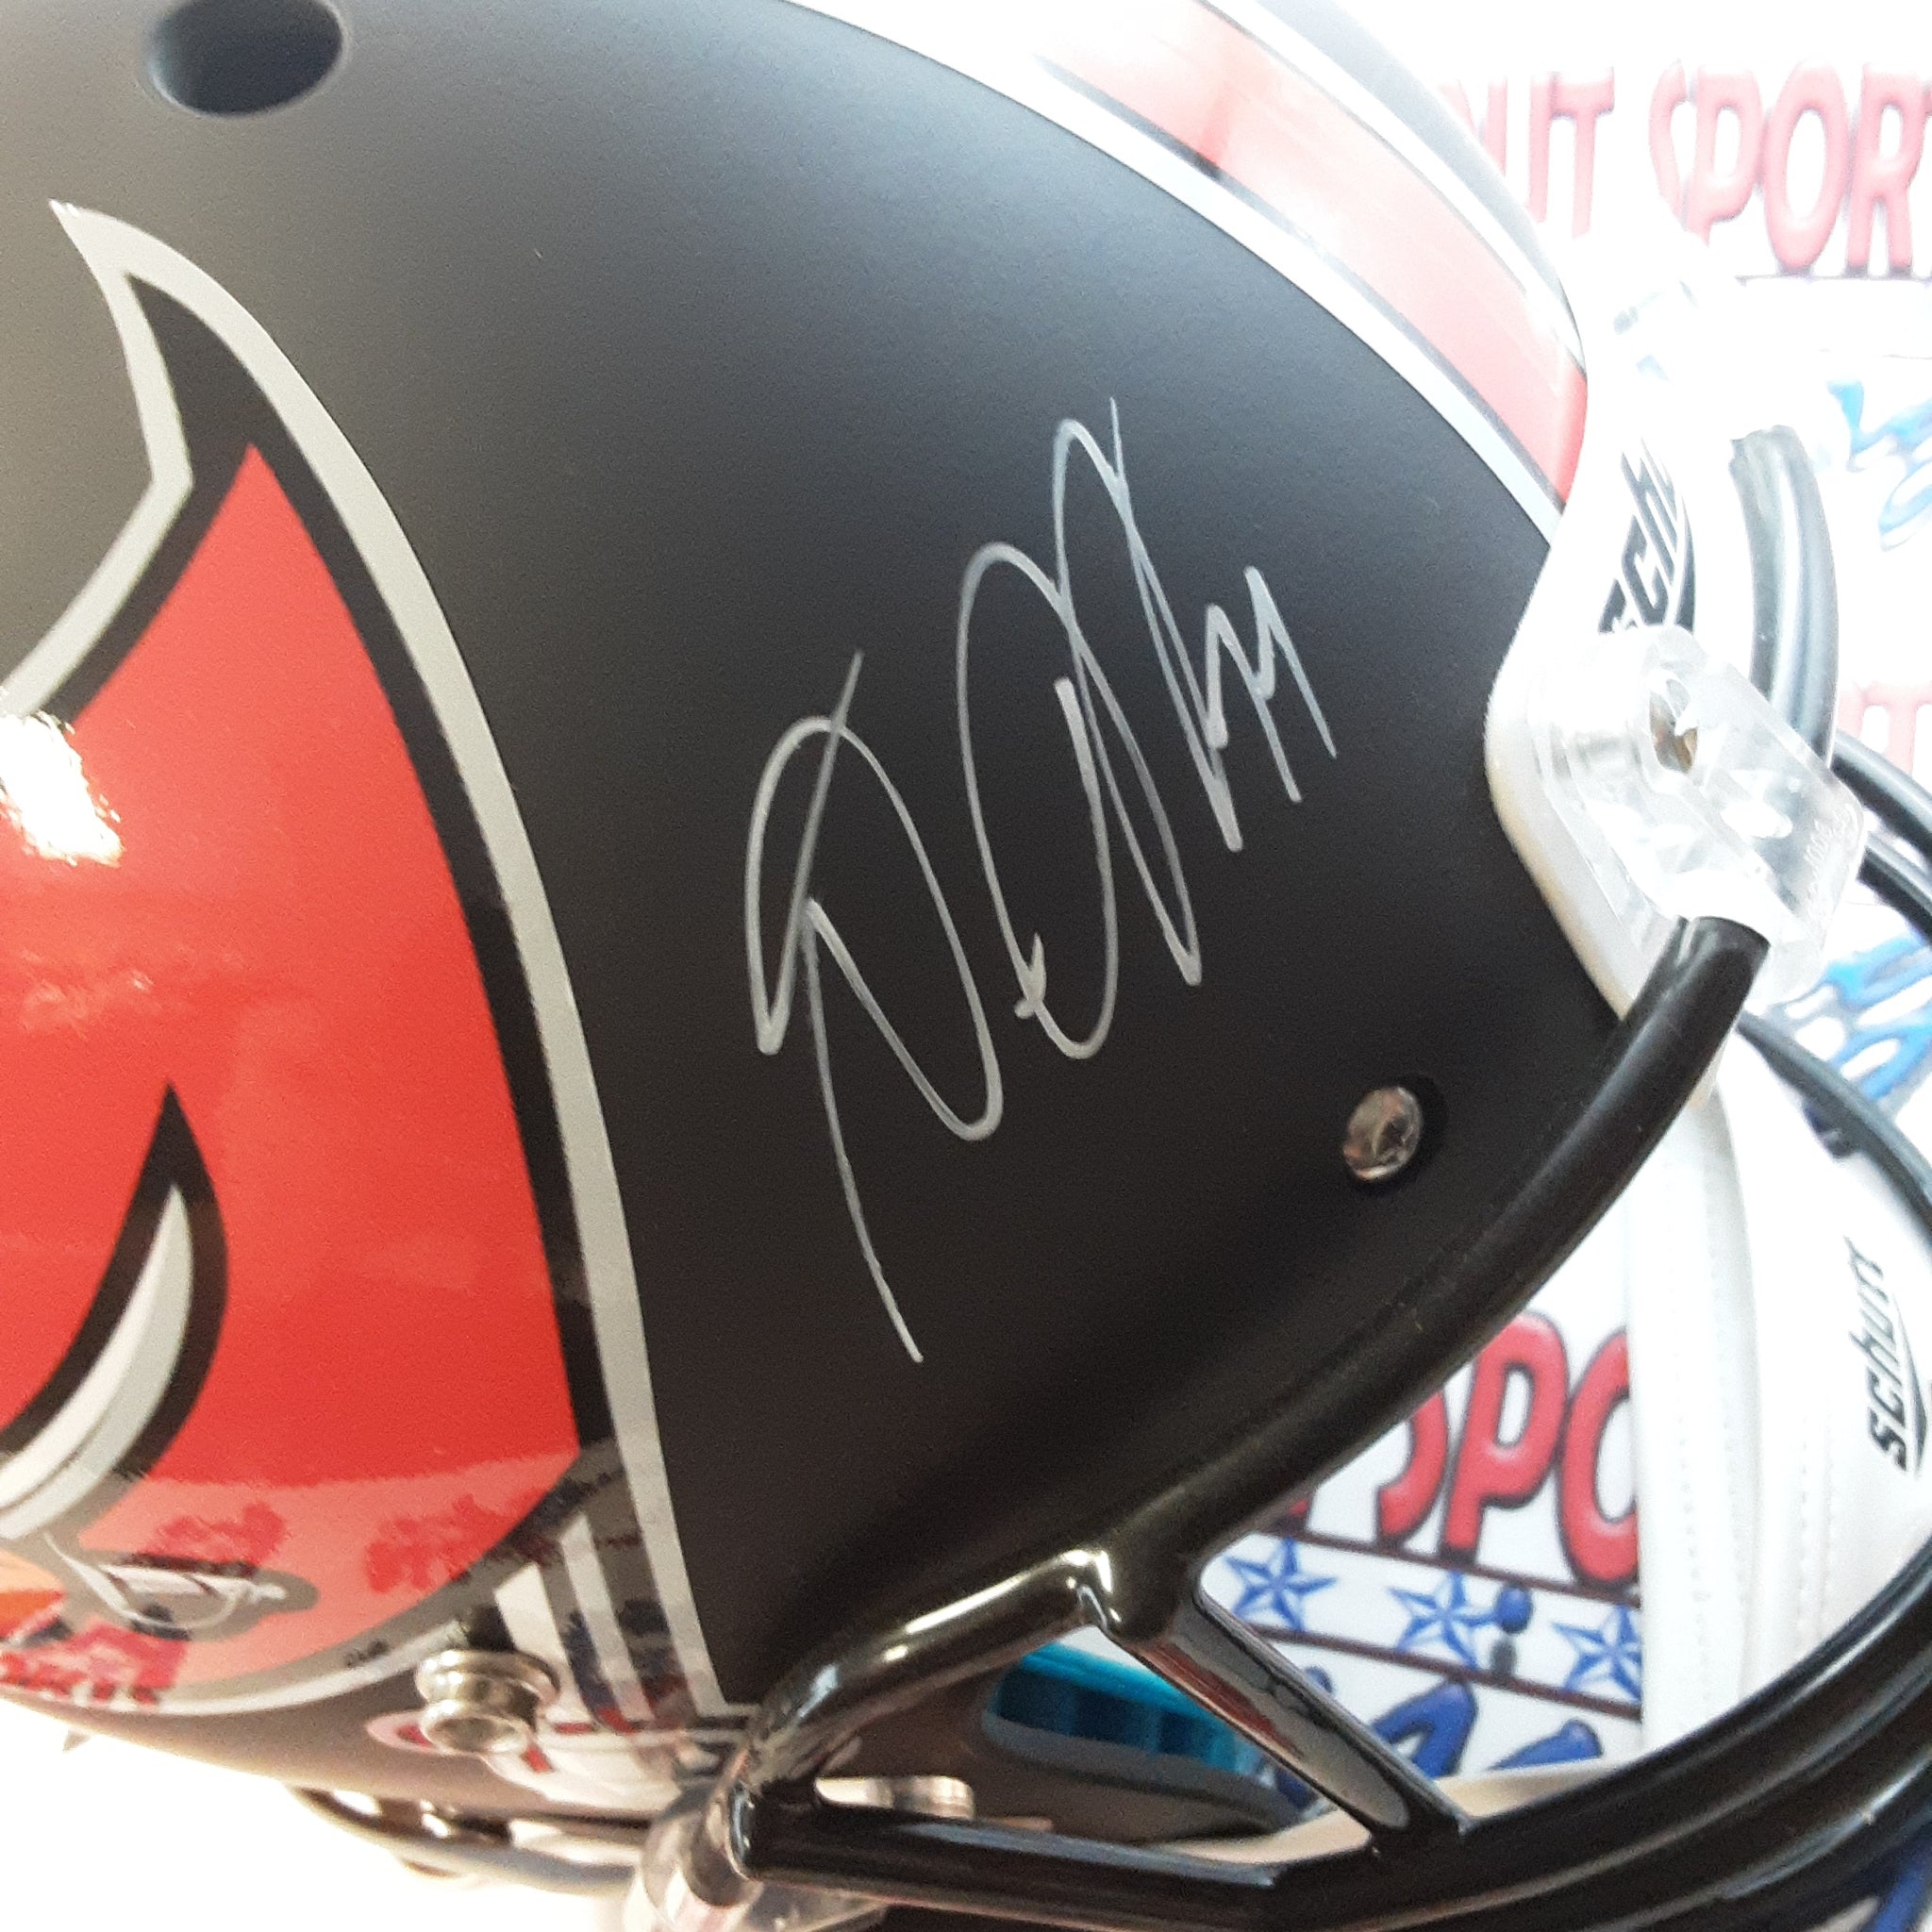 Mike Evans Desean Jackson Jameis Winston Authentic Signed Autographed Full-size Replica Helmet JSA